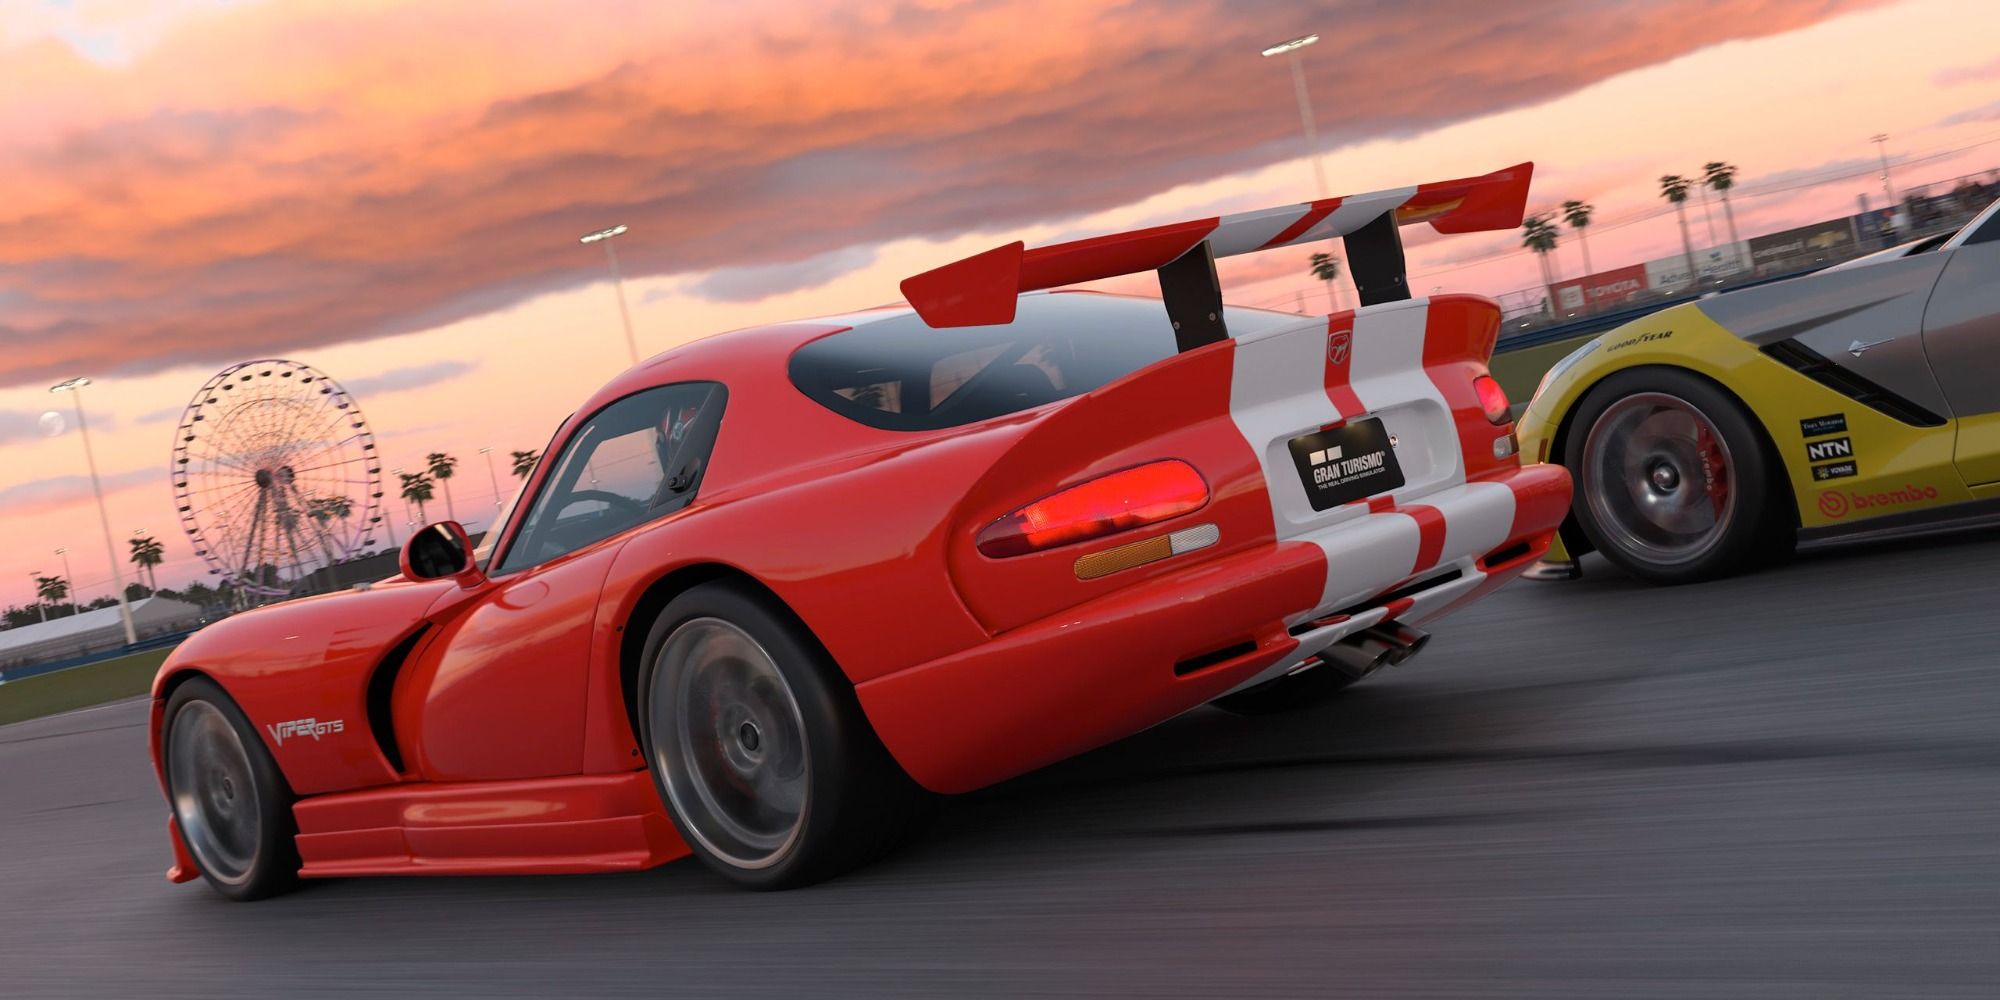 Gran Turismo 7 Faces Mass Backlash & Protest Again After Raising Car Prices  Despite MTX Criticisms 